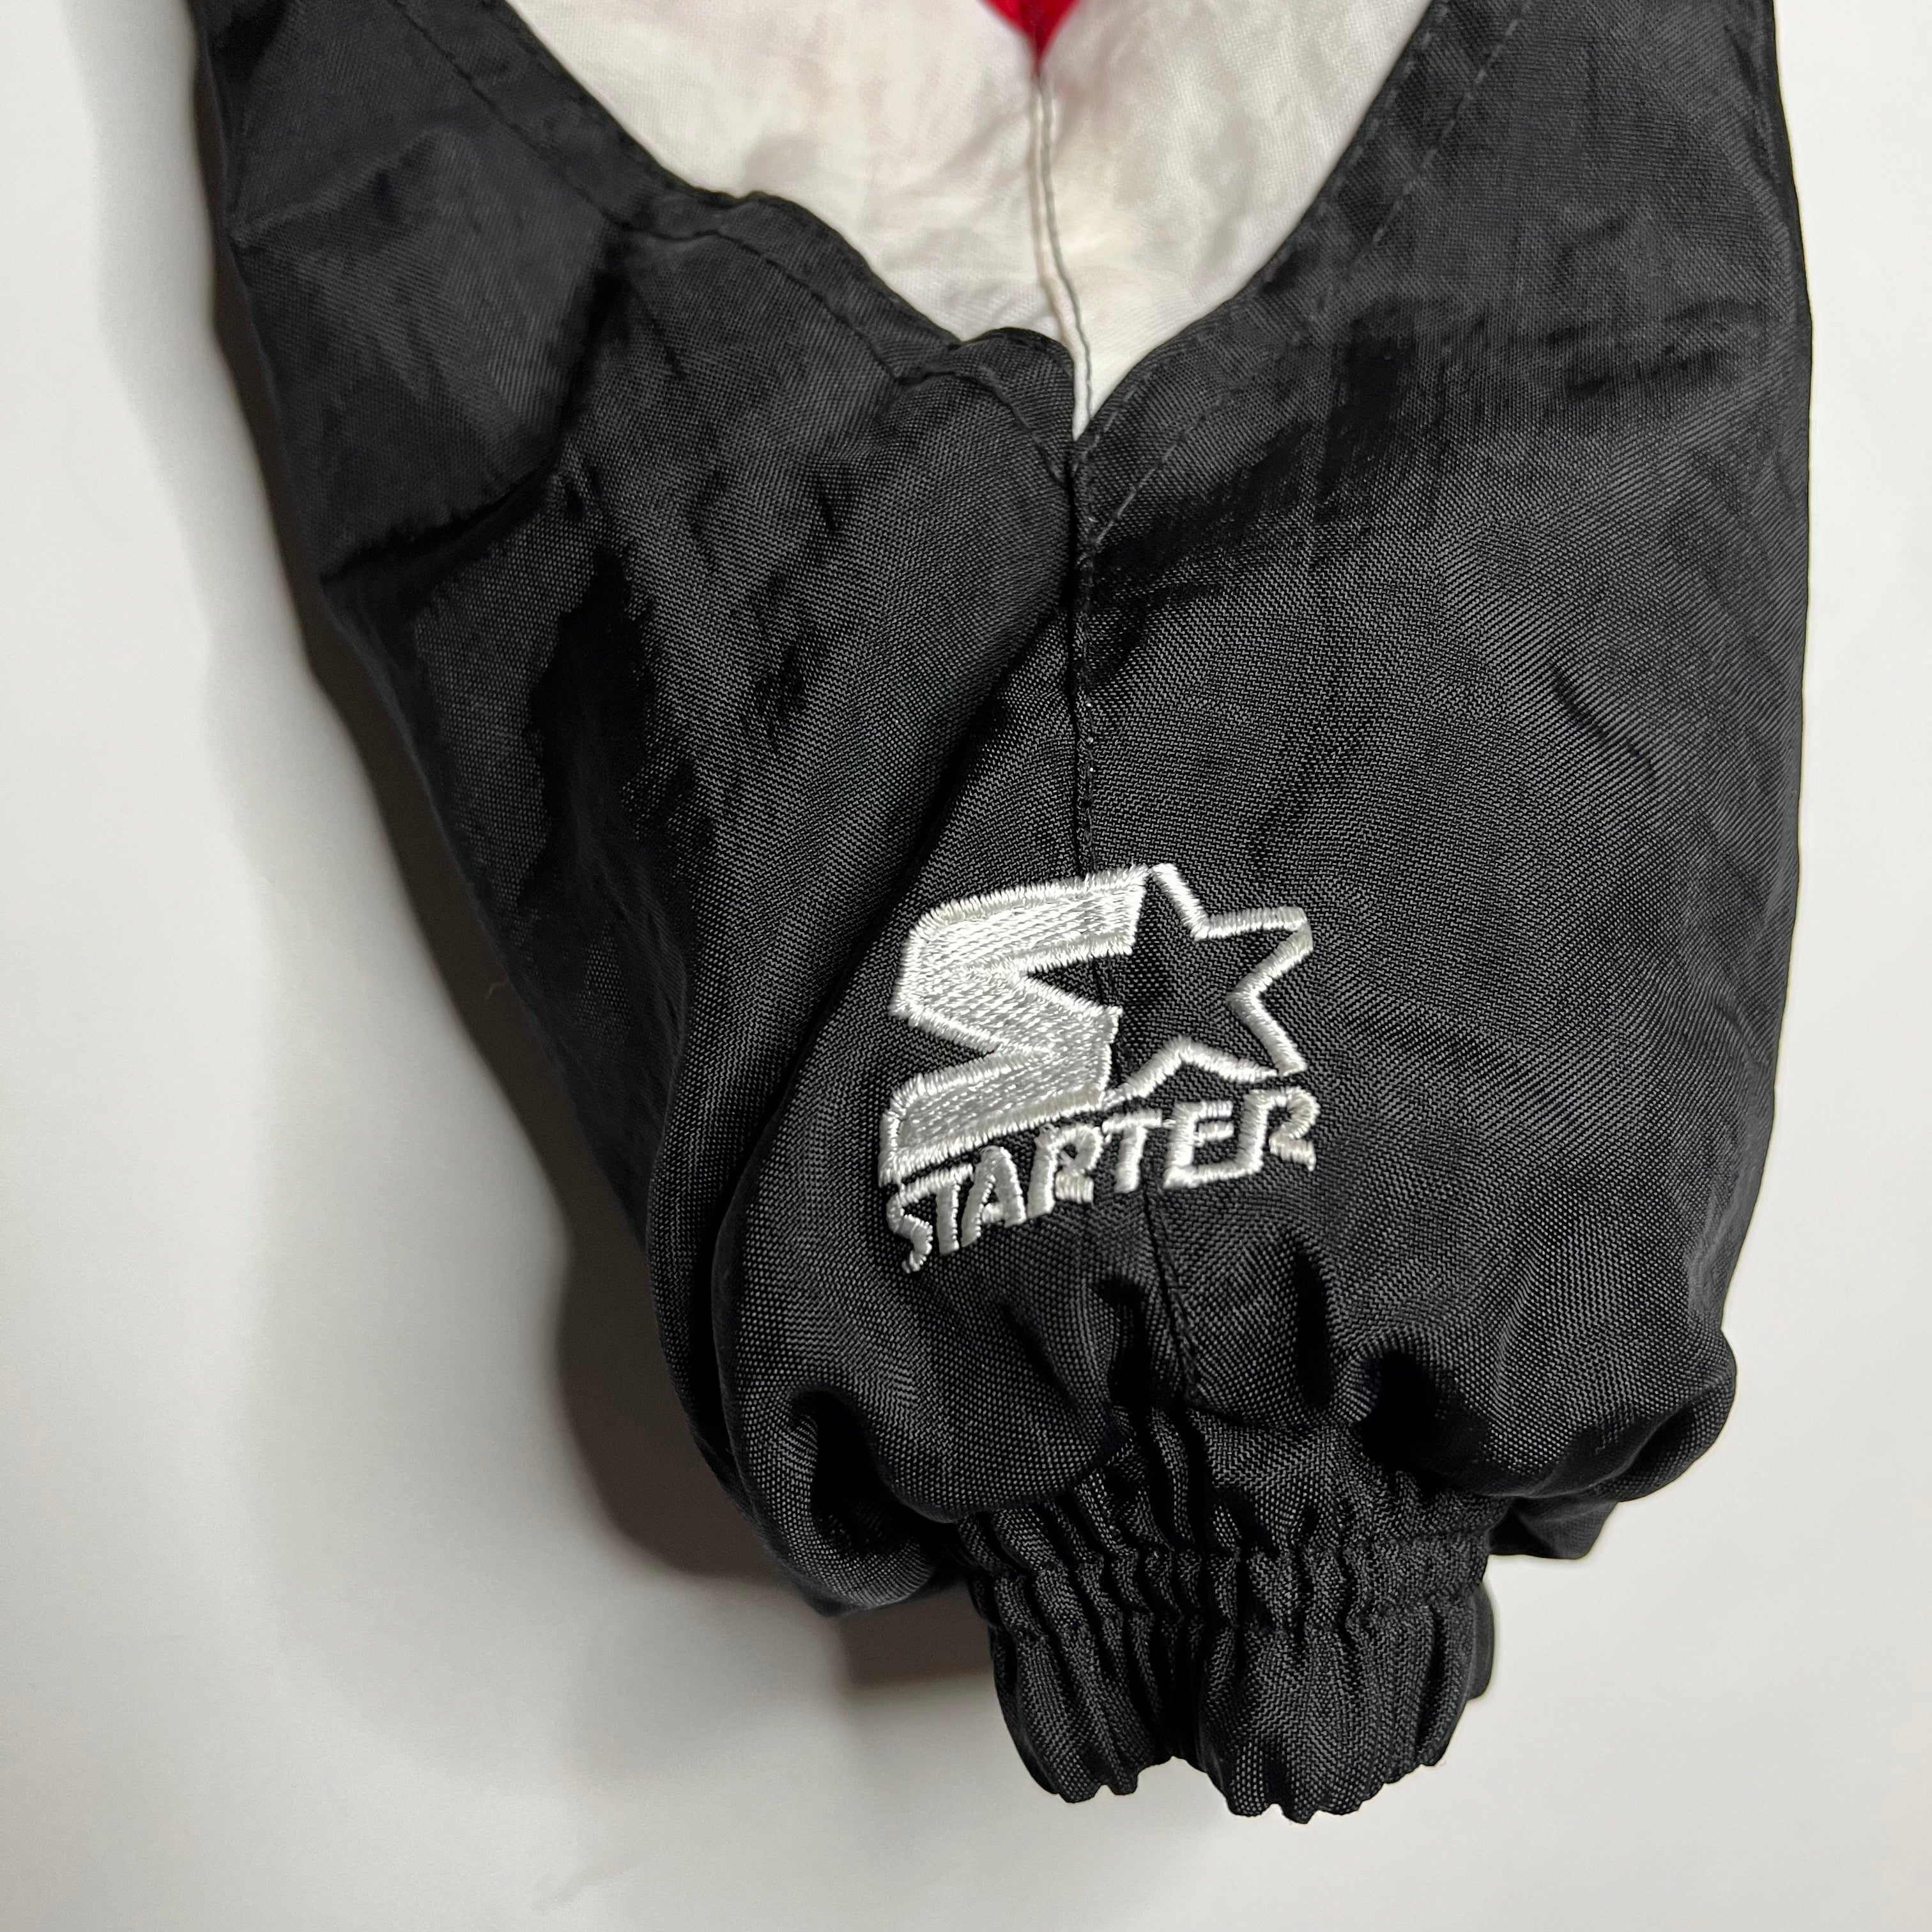 Chicago Blackhawks Starter Jacket (Size S)